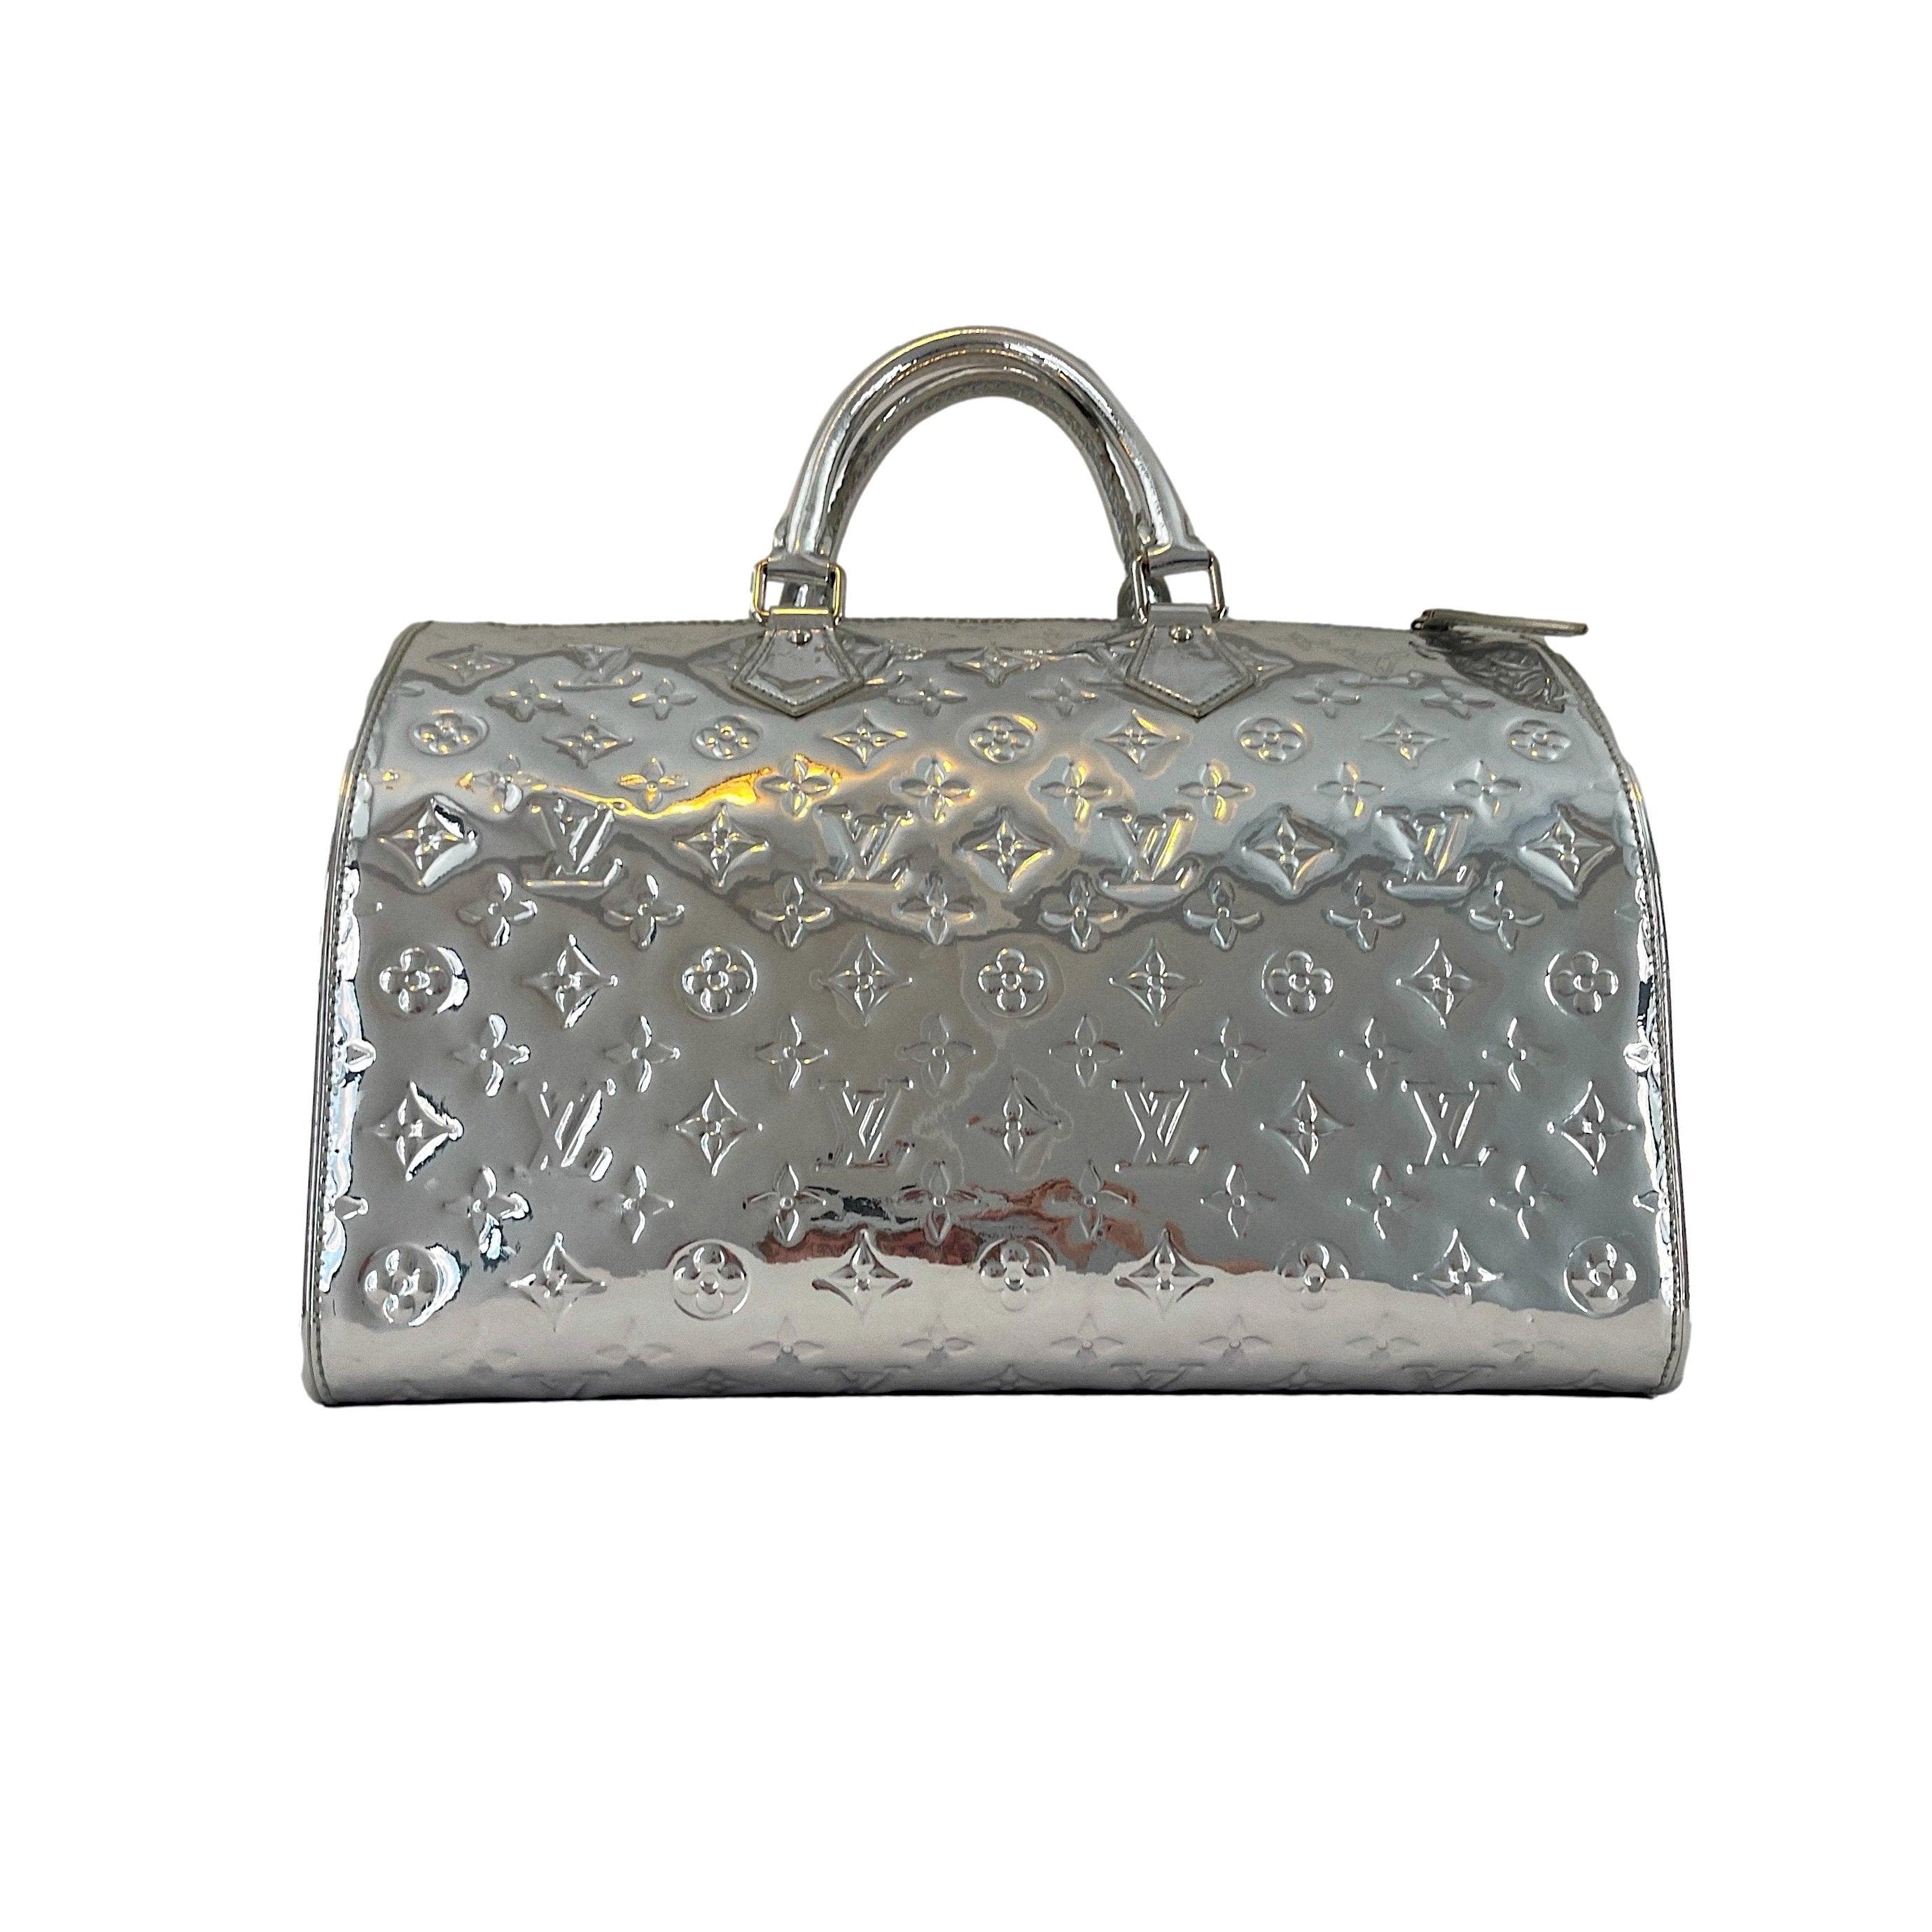 LOUIS VUITTON Monogram Miroir Speedy 35 Hand Bag Silver